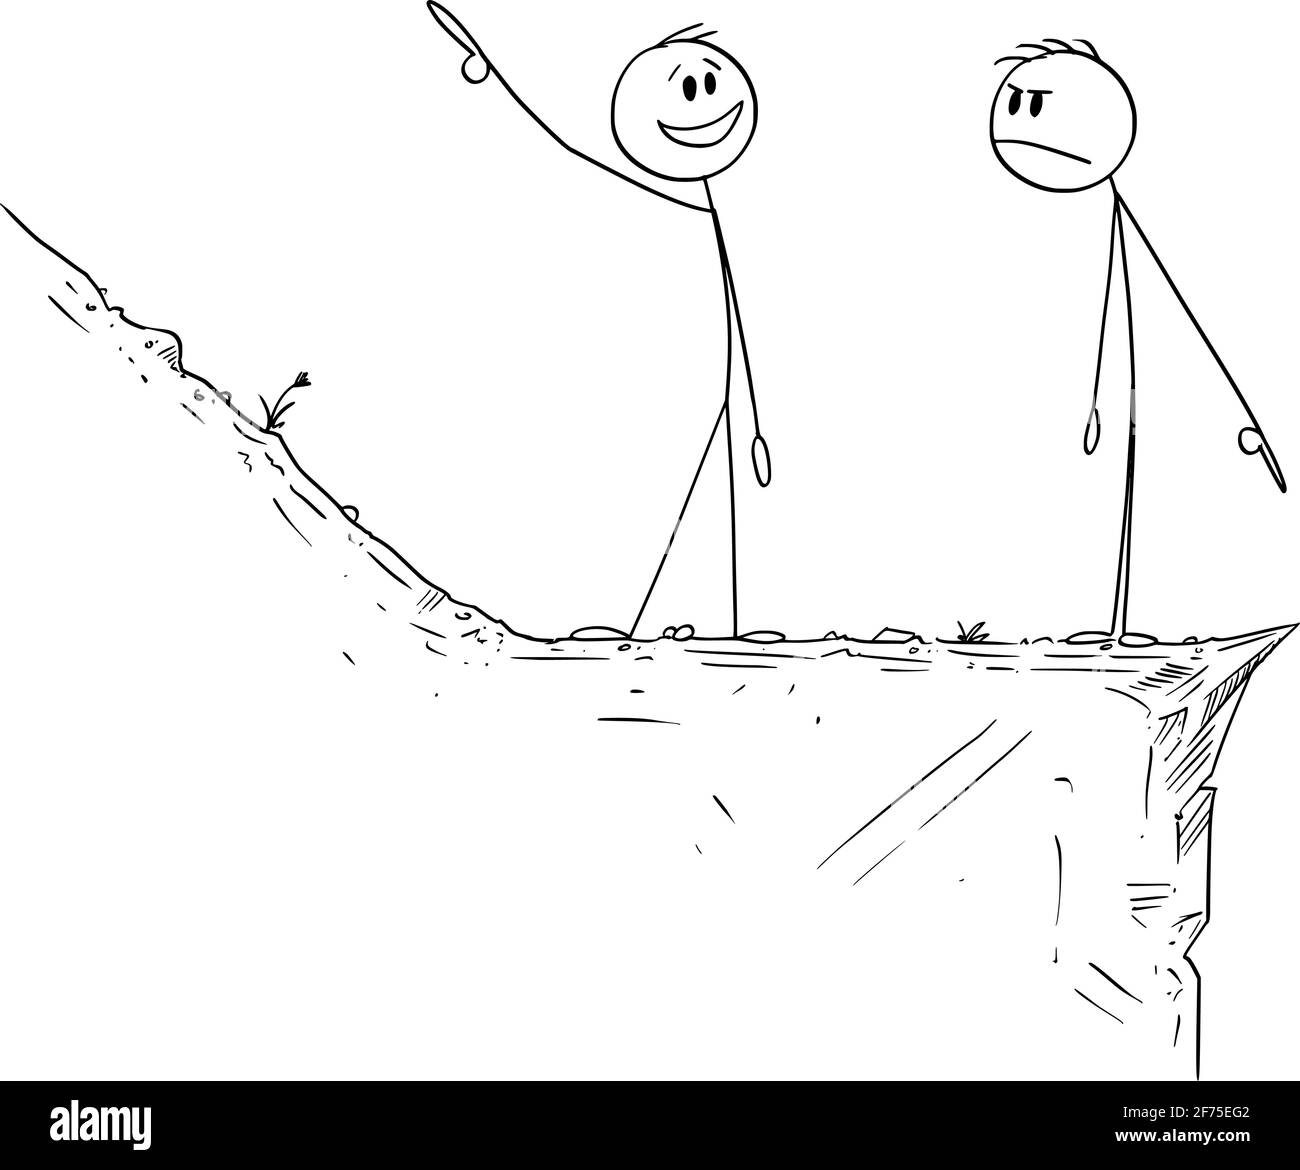 Optimismus und Pessimismus, Optimist und Pessimist, Way Up and Down, Vektor Cartoon Stick Figure Illustration Stock Vektor